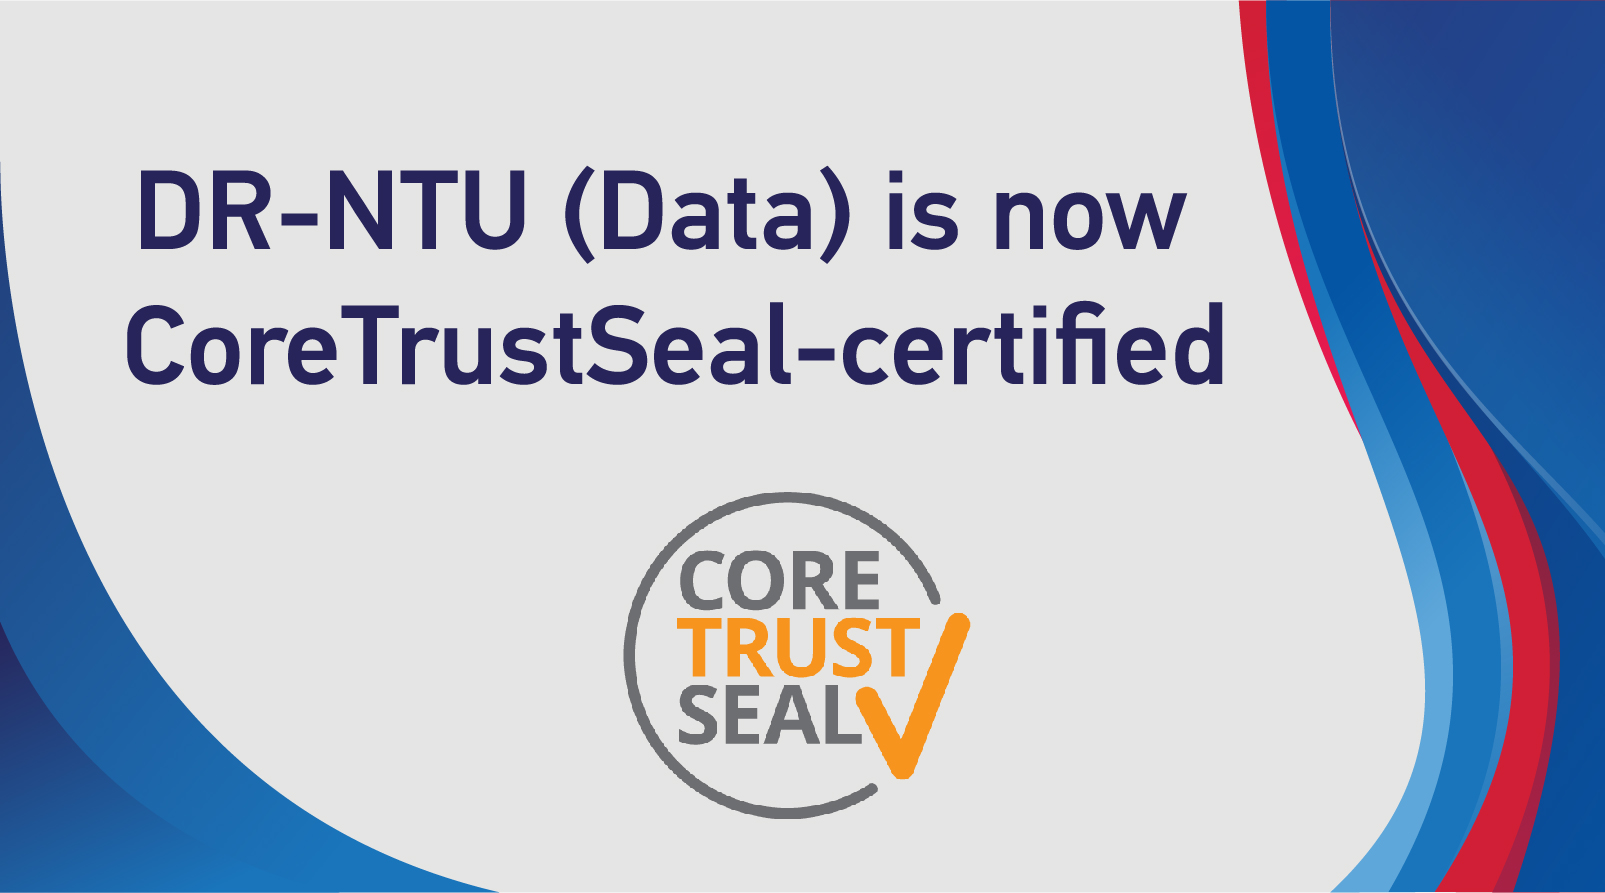 DR-NTU Data core trust seal certification